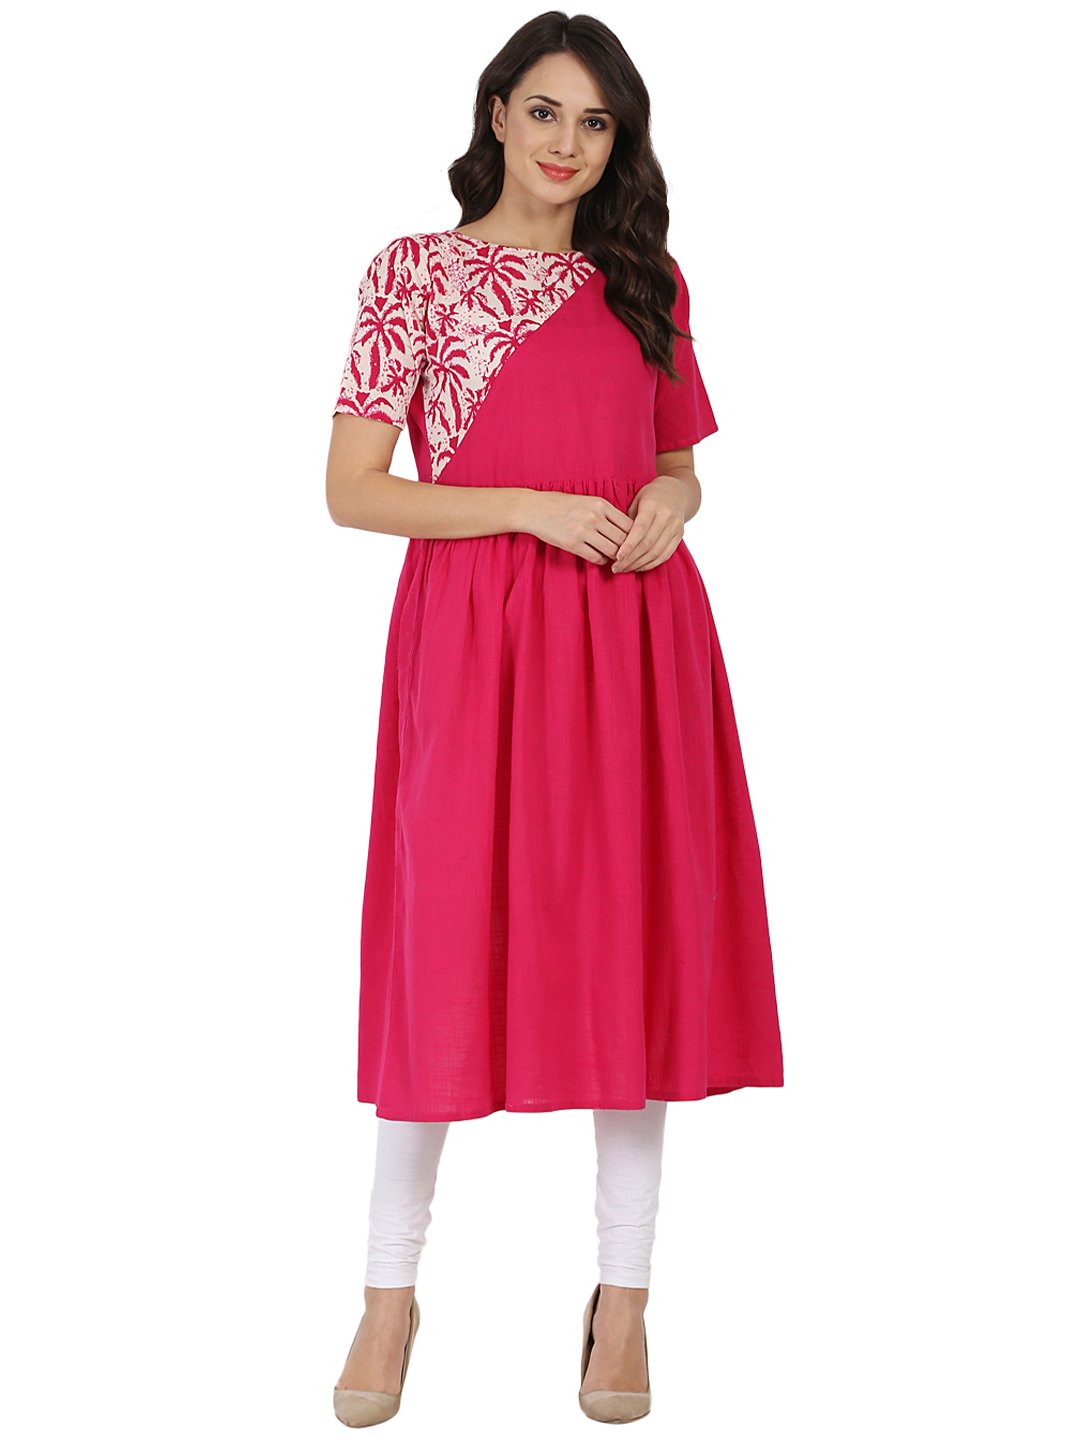 Buy Nayo Women's White & Pink Printed Kurta with Trousers  (Women's_Pink_Medium Size) at Amazon.in